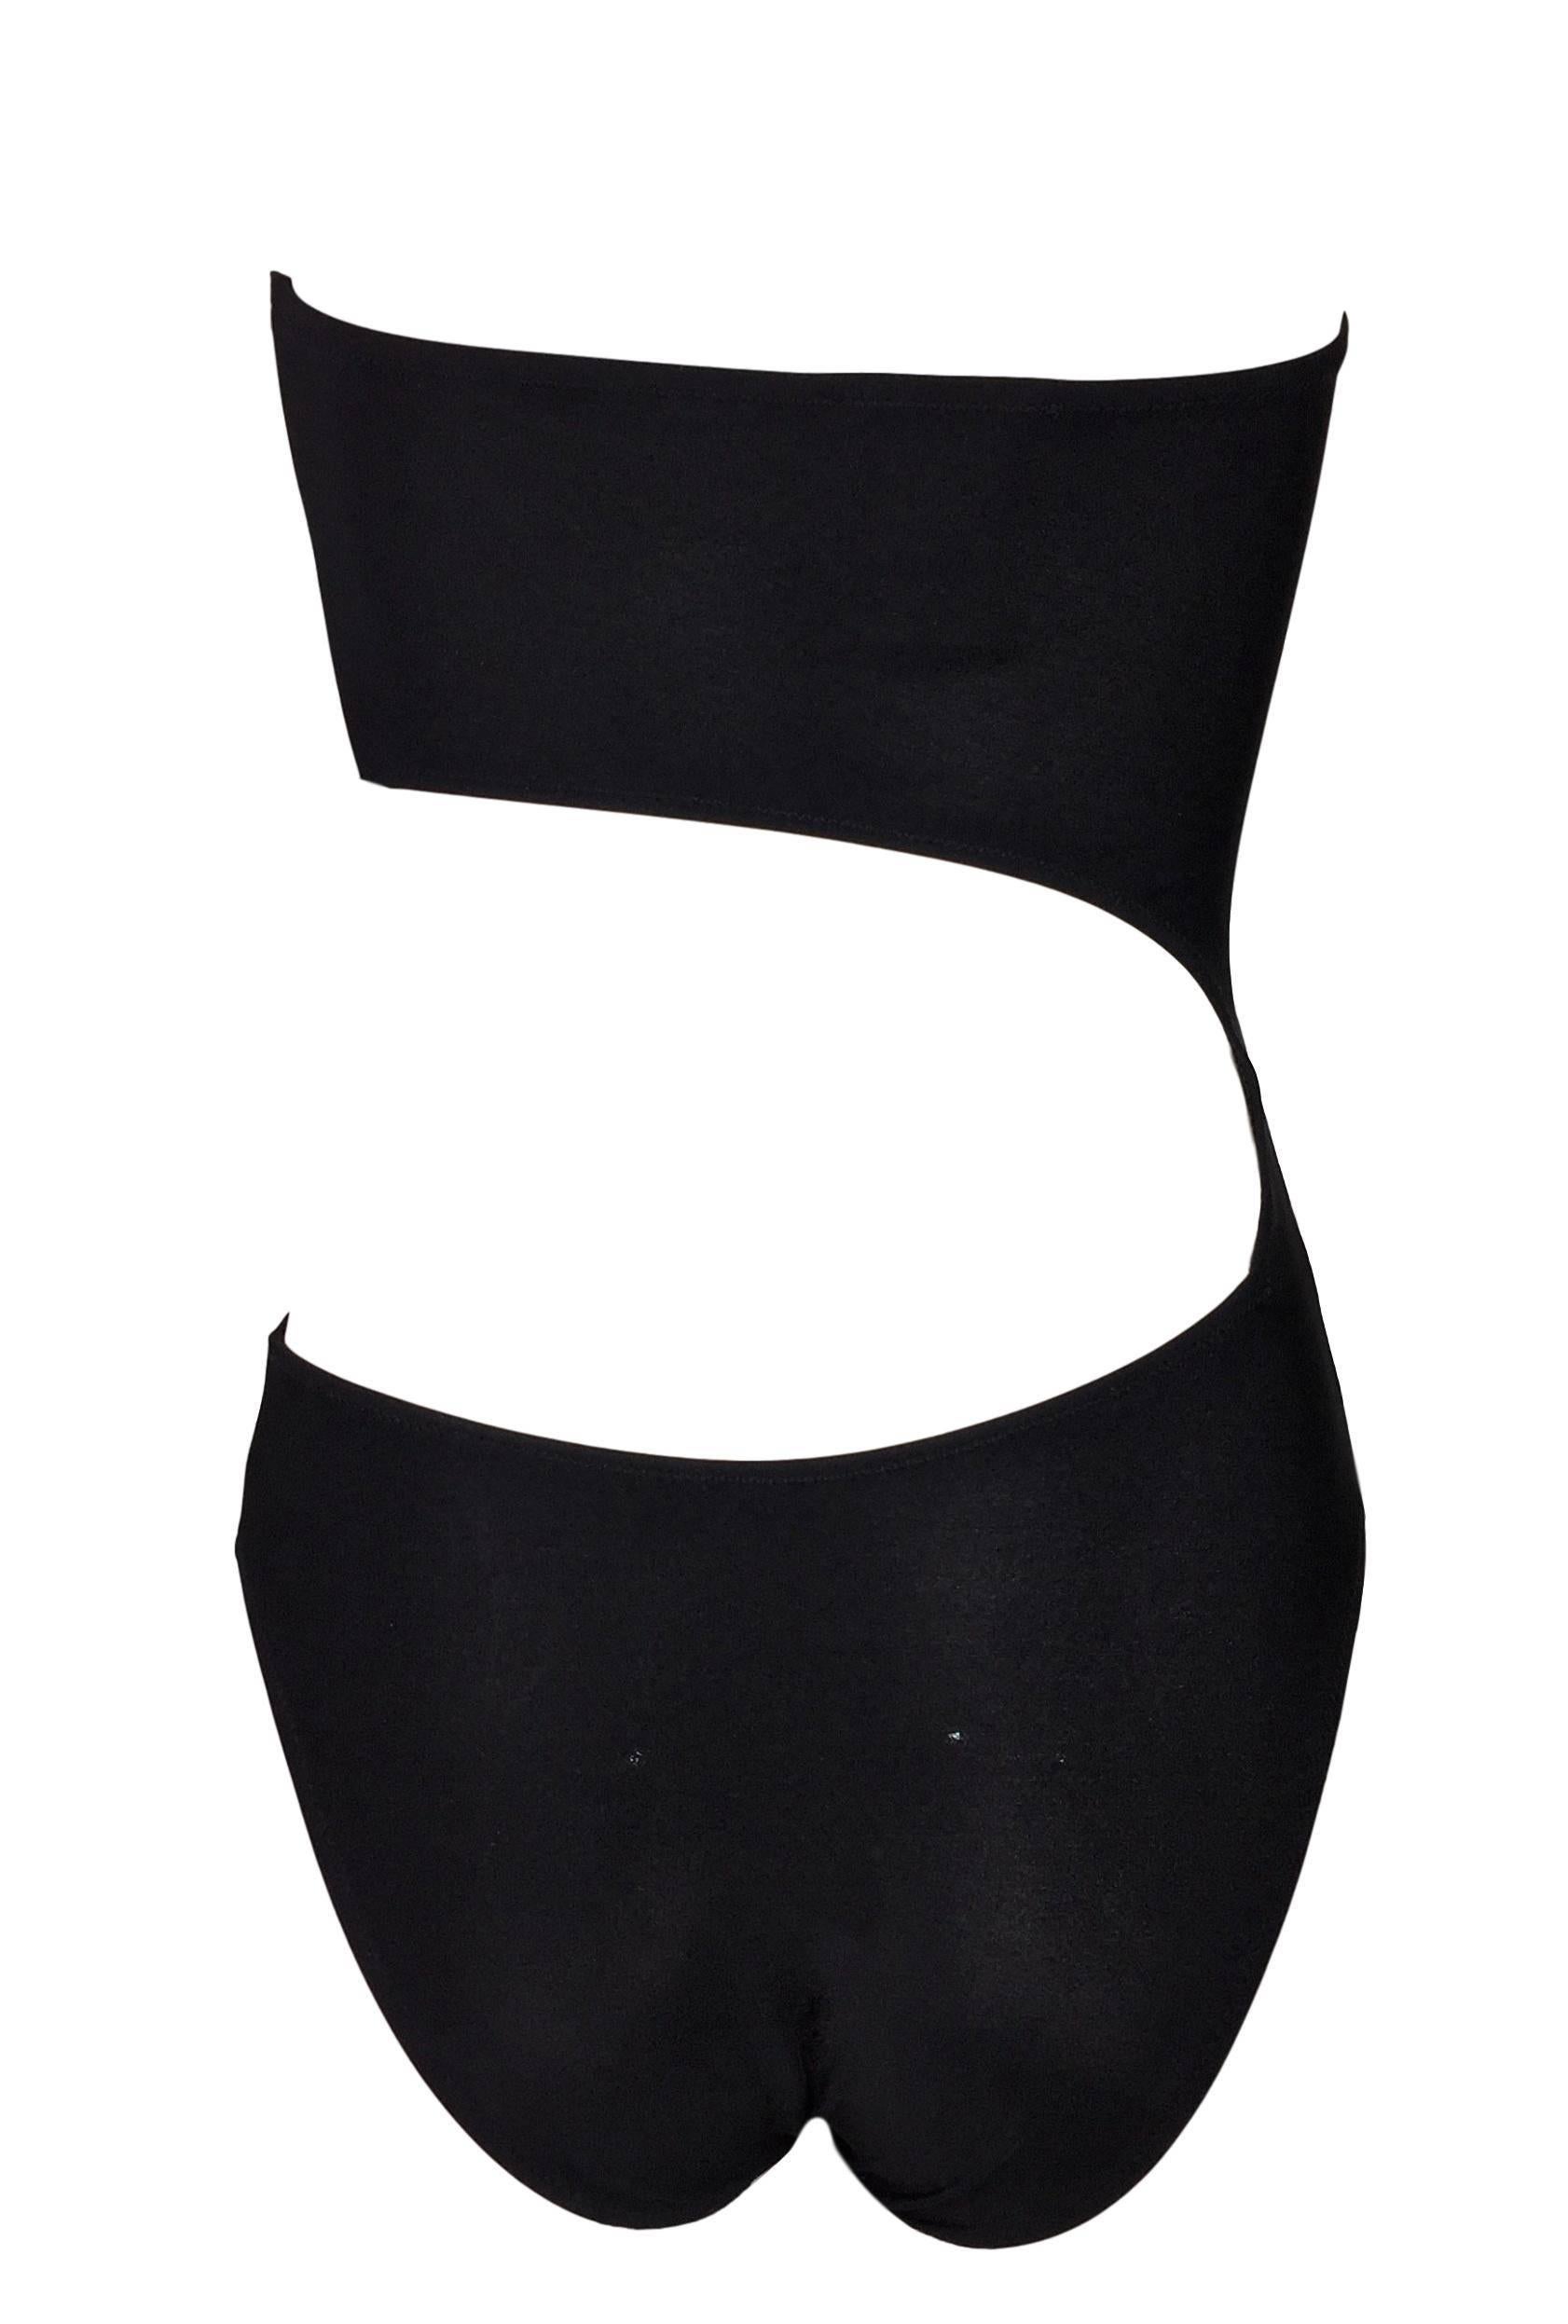 Women's S/S 2001 Gianni Versace Sheer Black Strapless Cut-Out Bodysuit Swimsuit